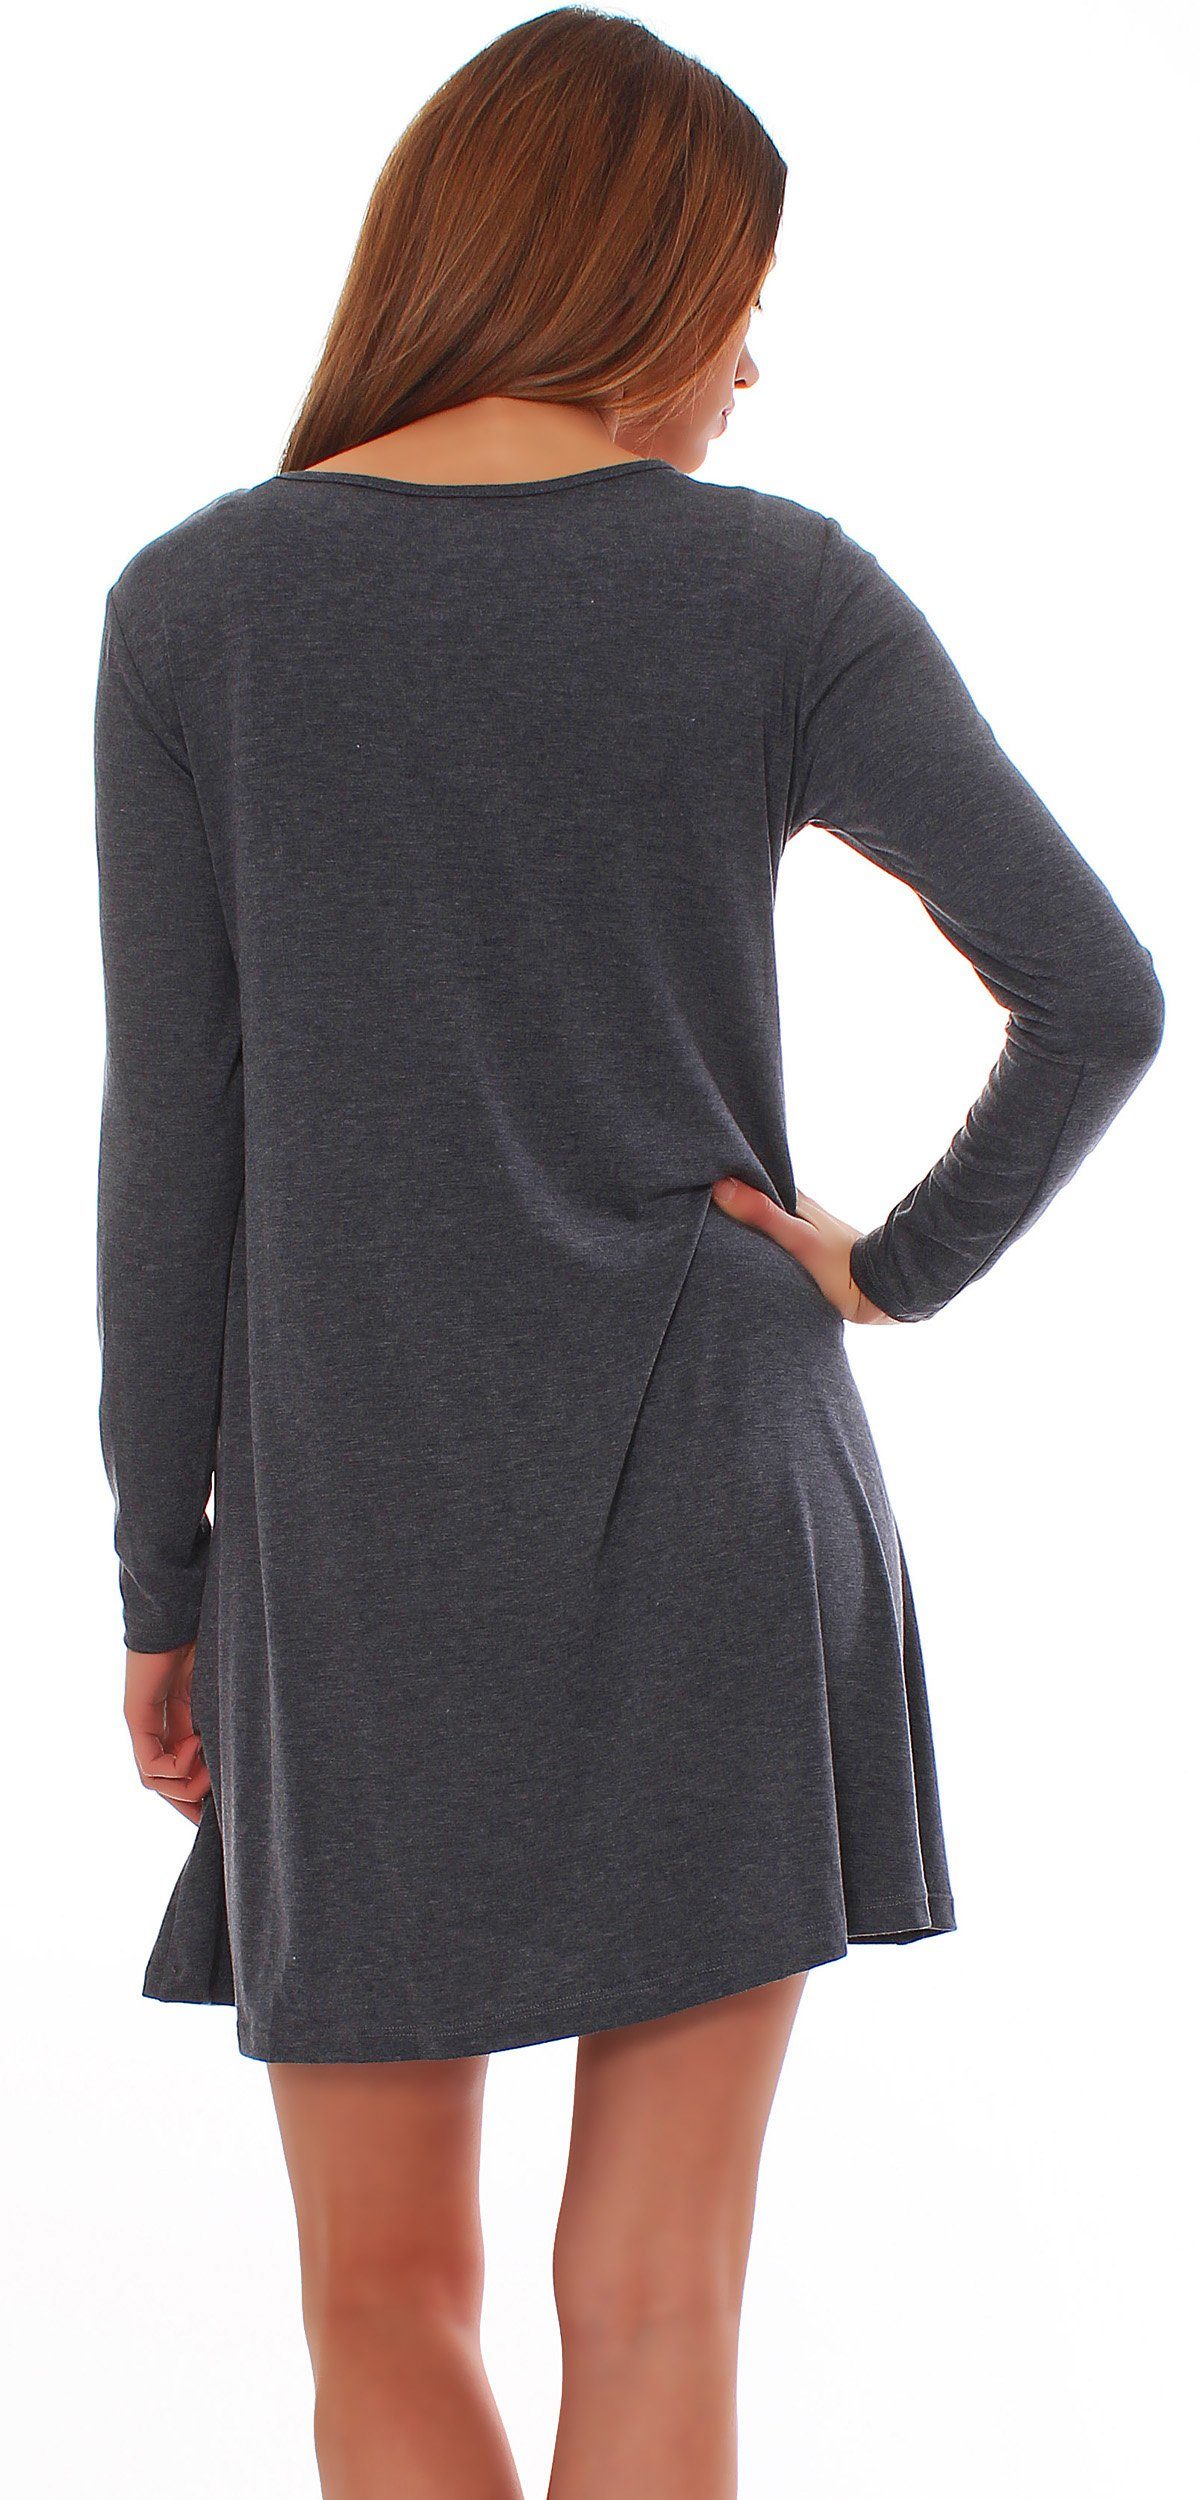 A-Linien-Kleid Graphit_Lang Minikleid mit Tunika 6514 Longshirt Taschen Tunika Pulli Mississhop Kleid